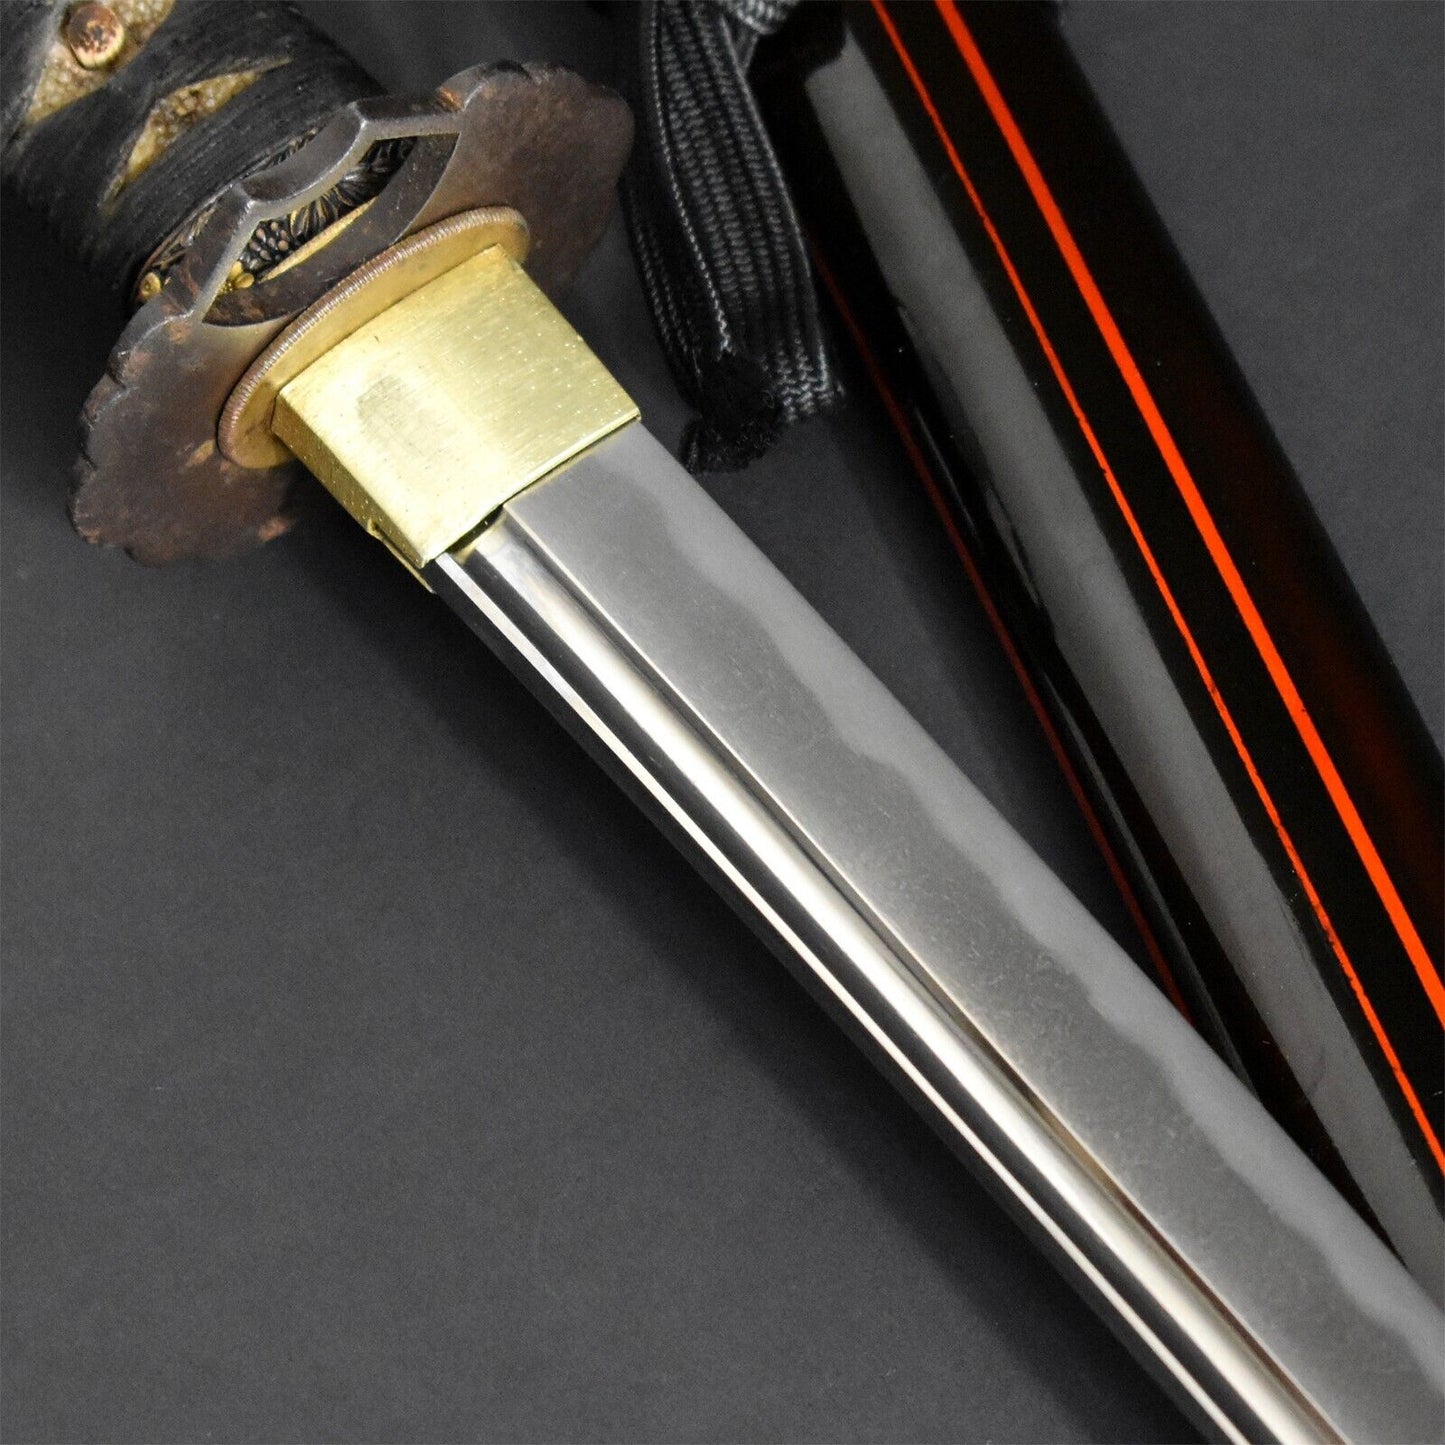 Genuine Collectible Nihonto Japanese Katana Long Sword Samurai Blade Weapon from Muromachi Era.